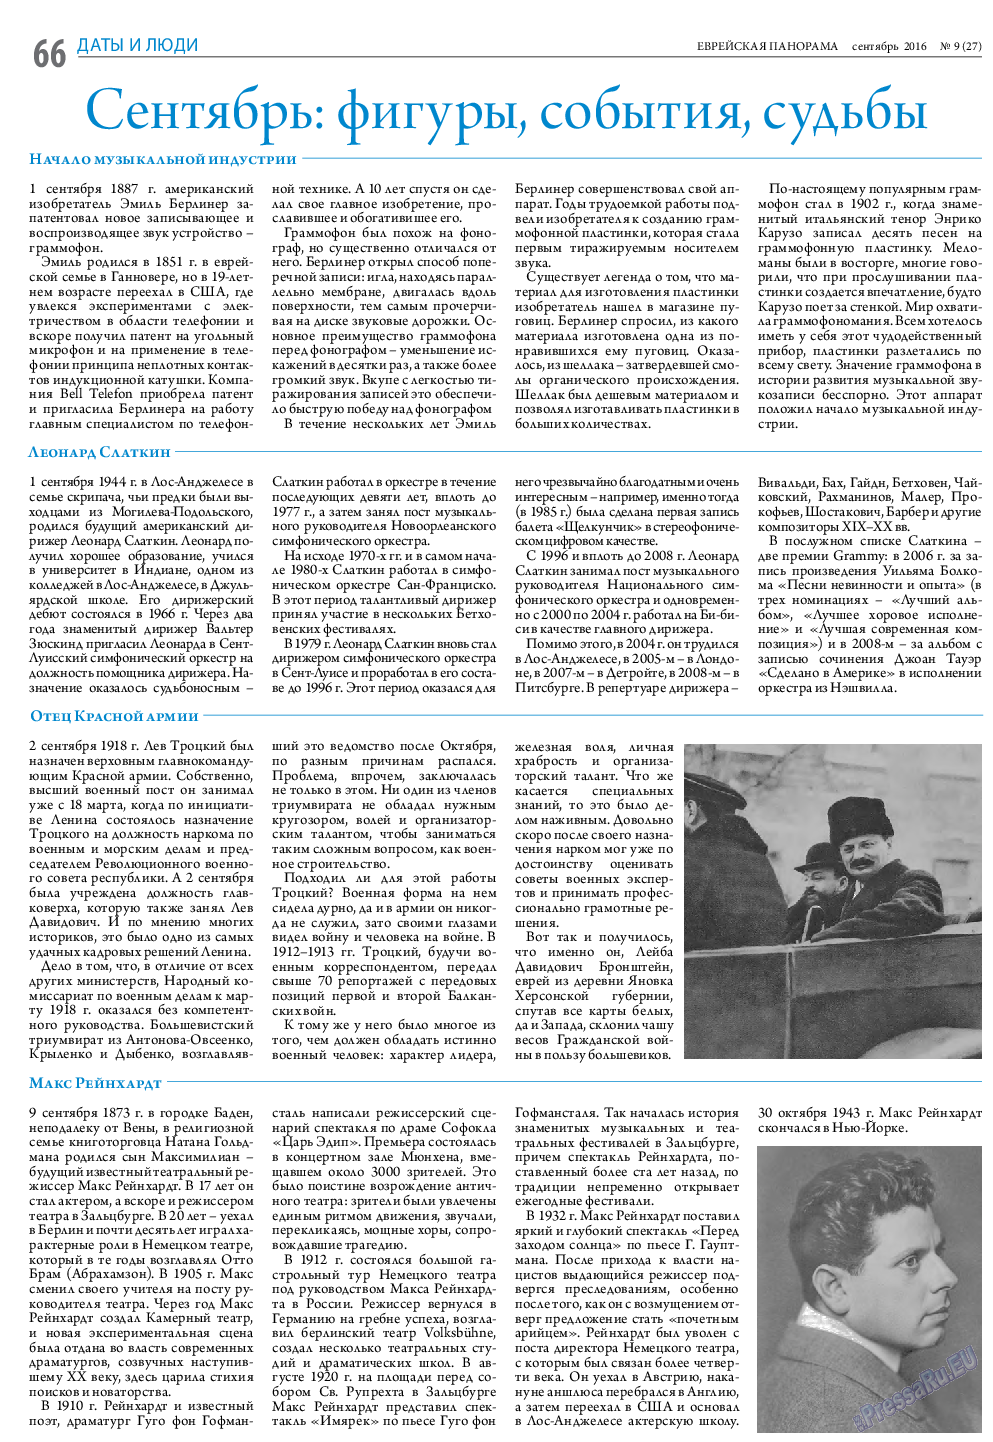 Еврейская панорама, газета. 2016 №9 стр.66